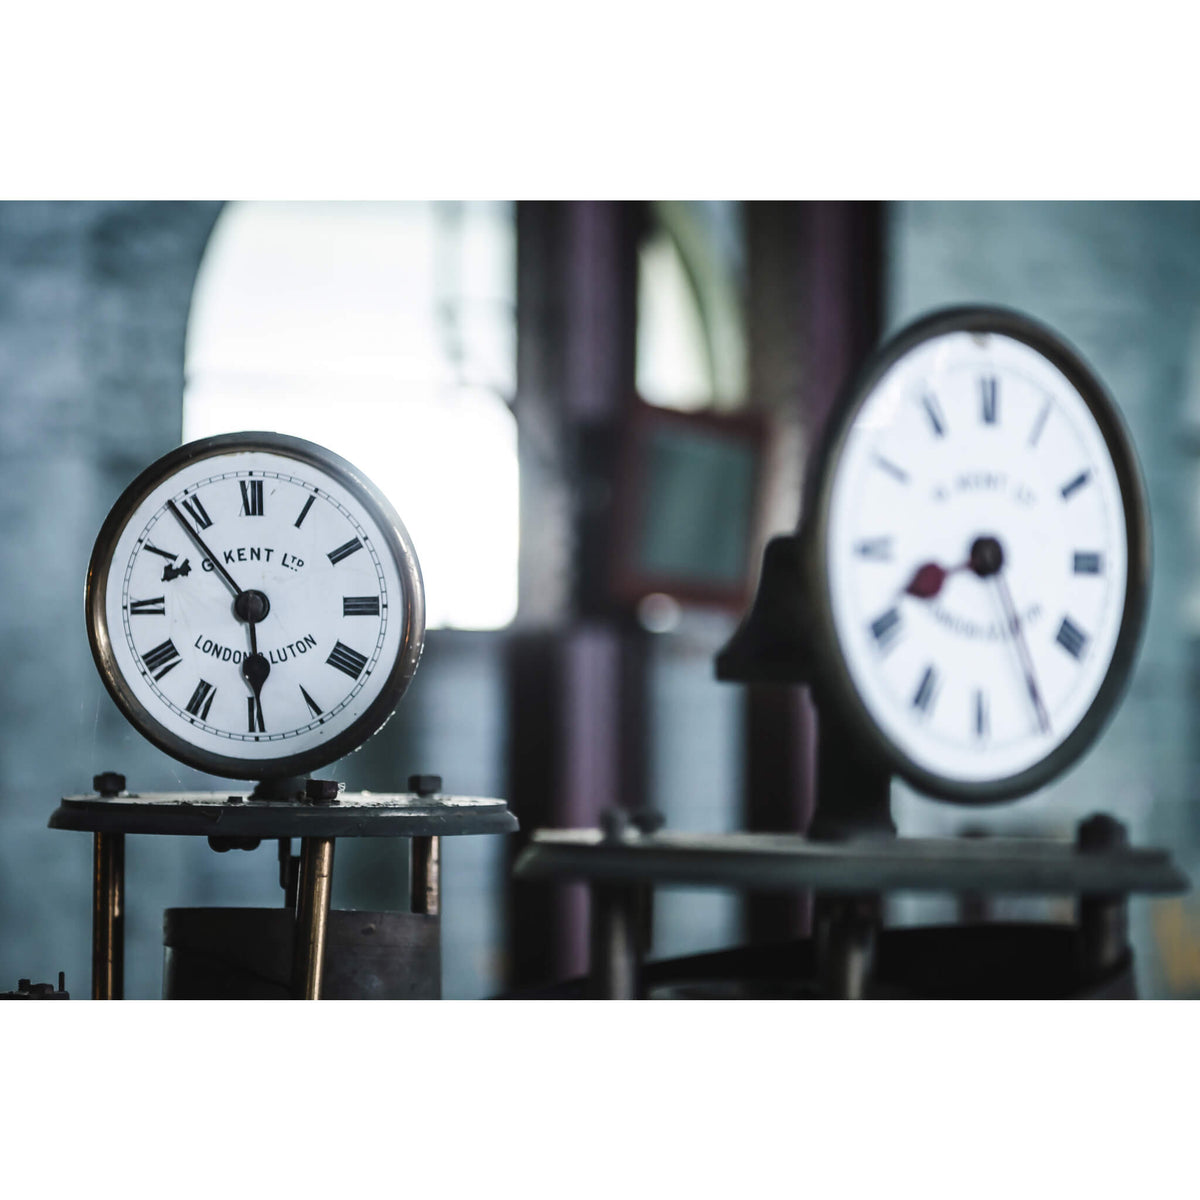 Clocks | West Ryde Pumping Station Fine Art Print - Lost Collective Shop